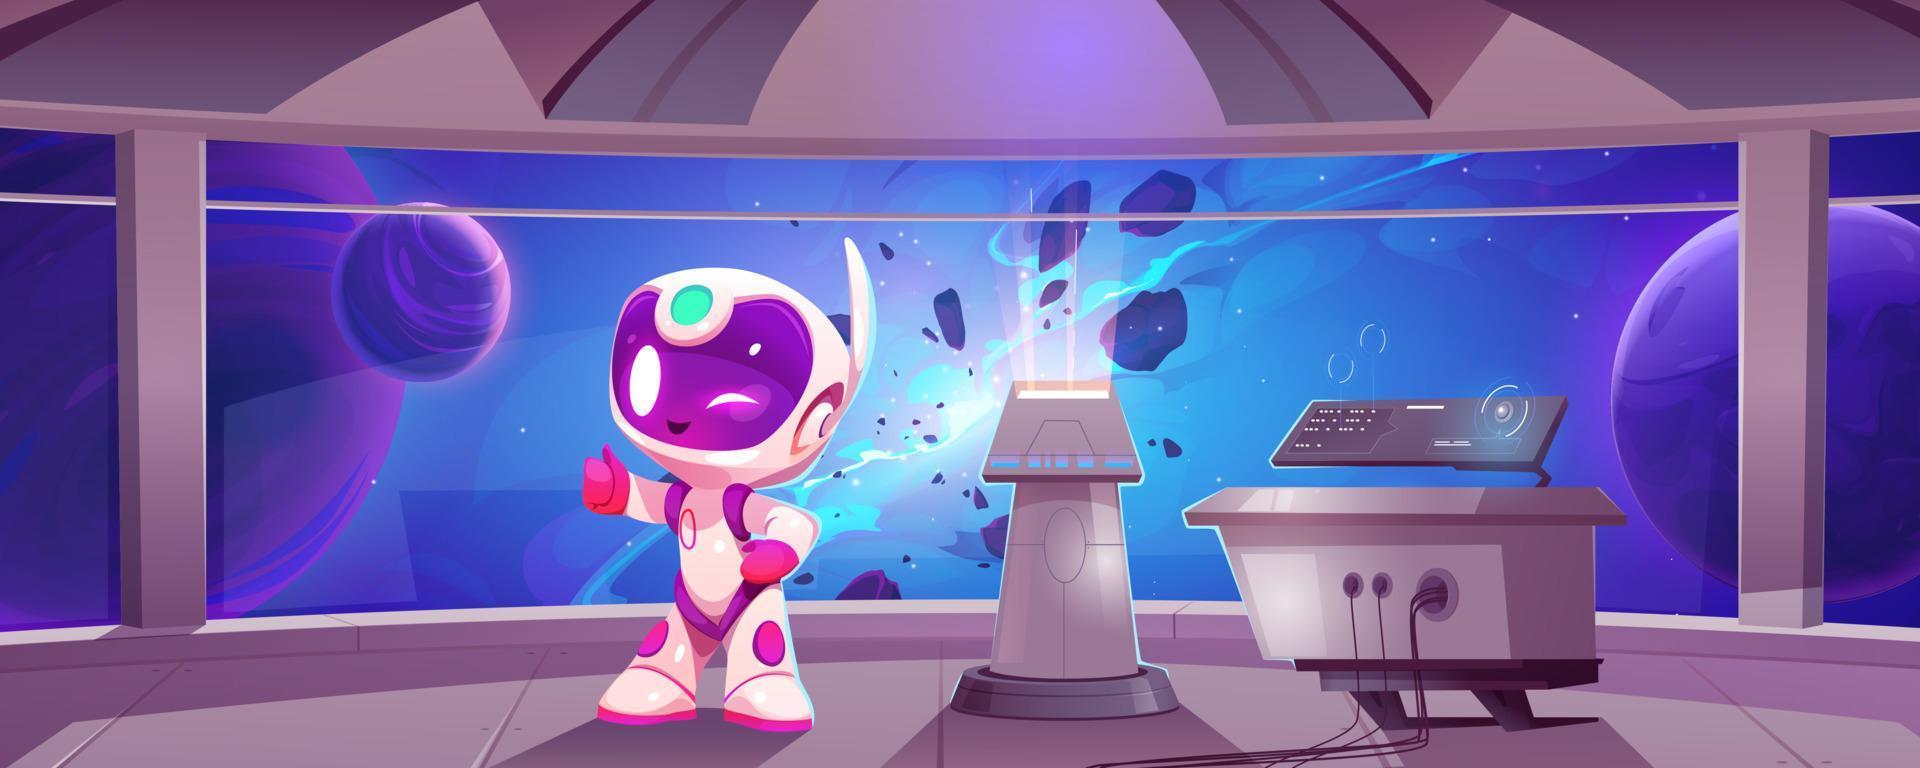 dibujos animados vector astronauta en astronave cabina